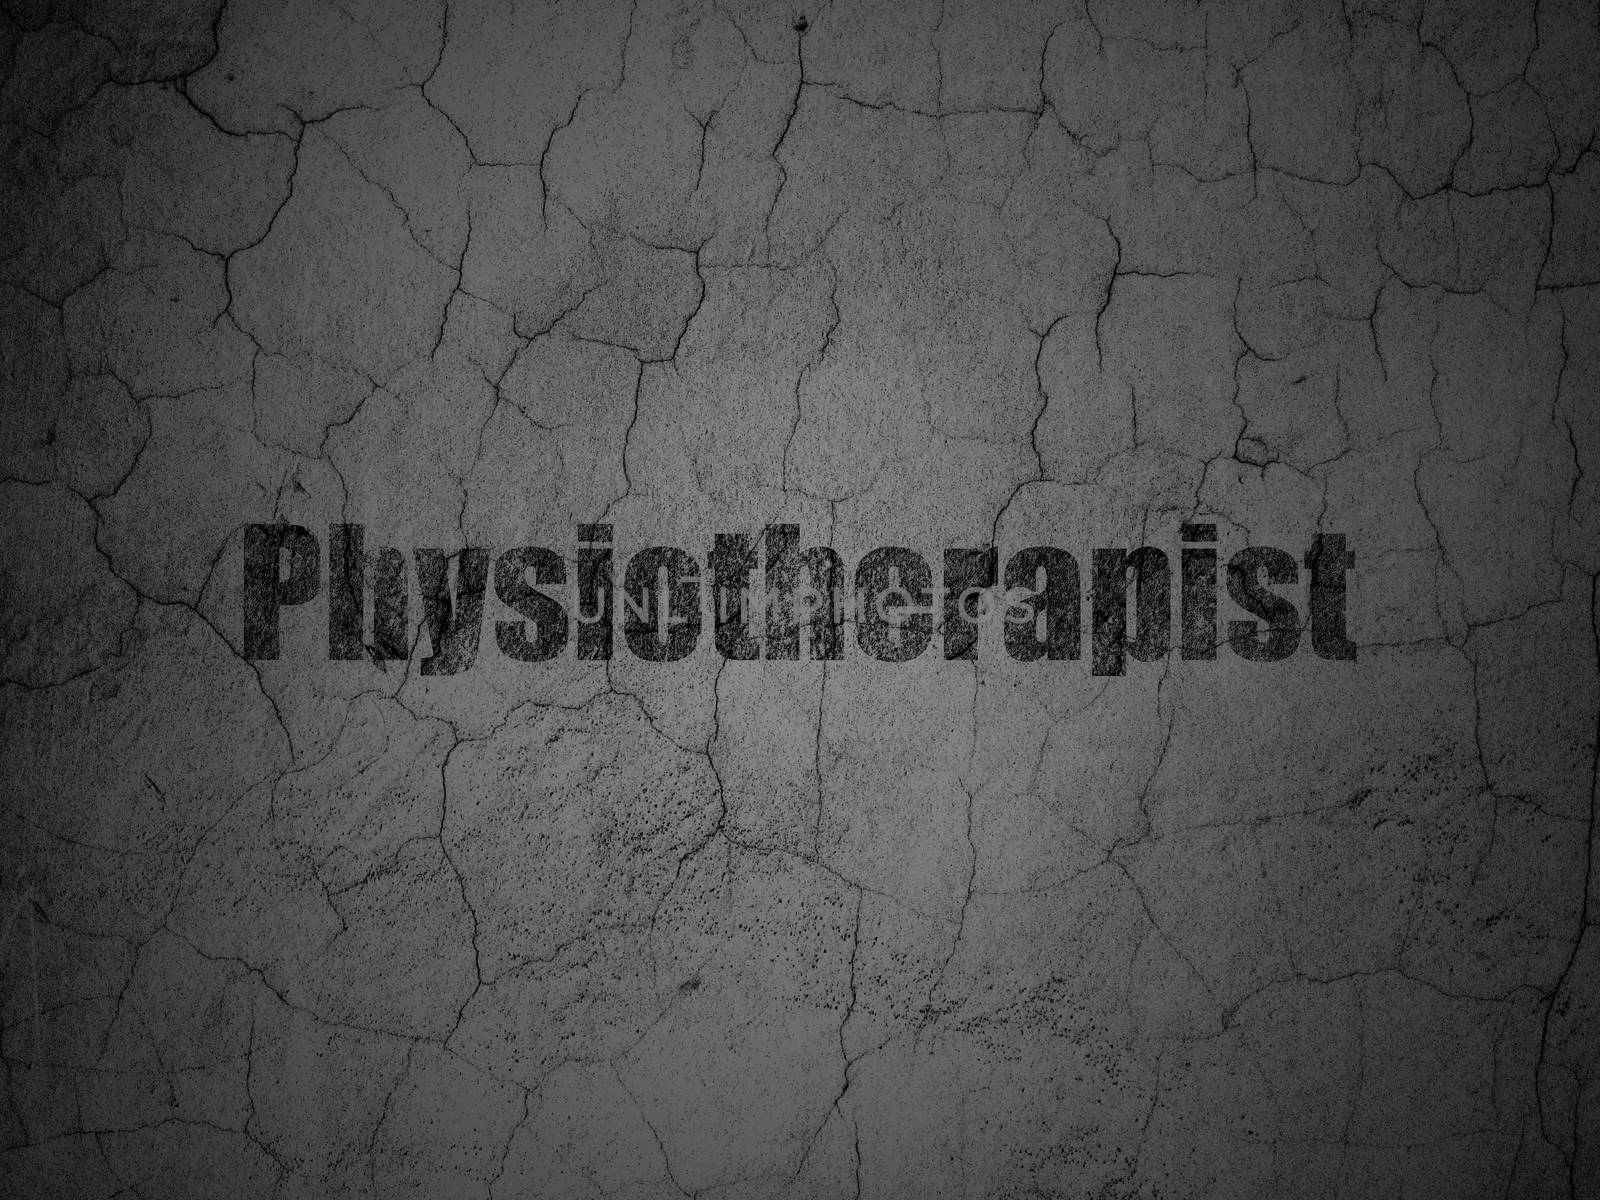 Medicine concept: Physiotherapist on grunge wall background by maxkabakov